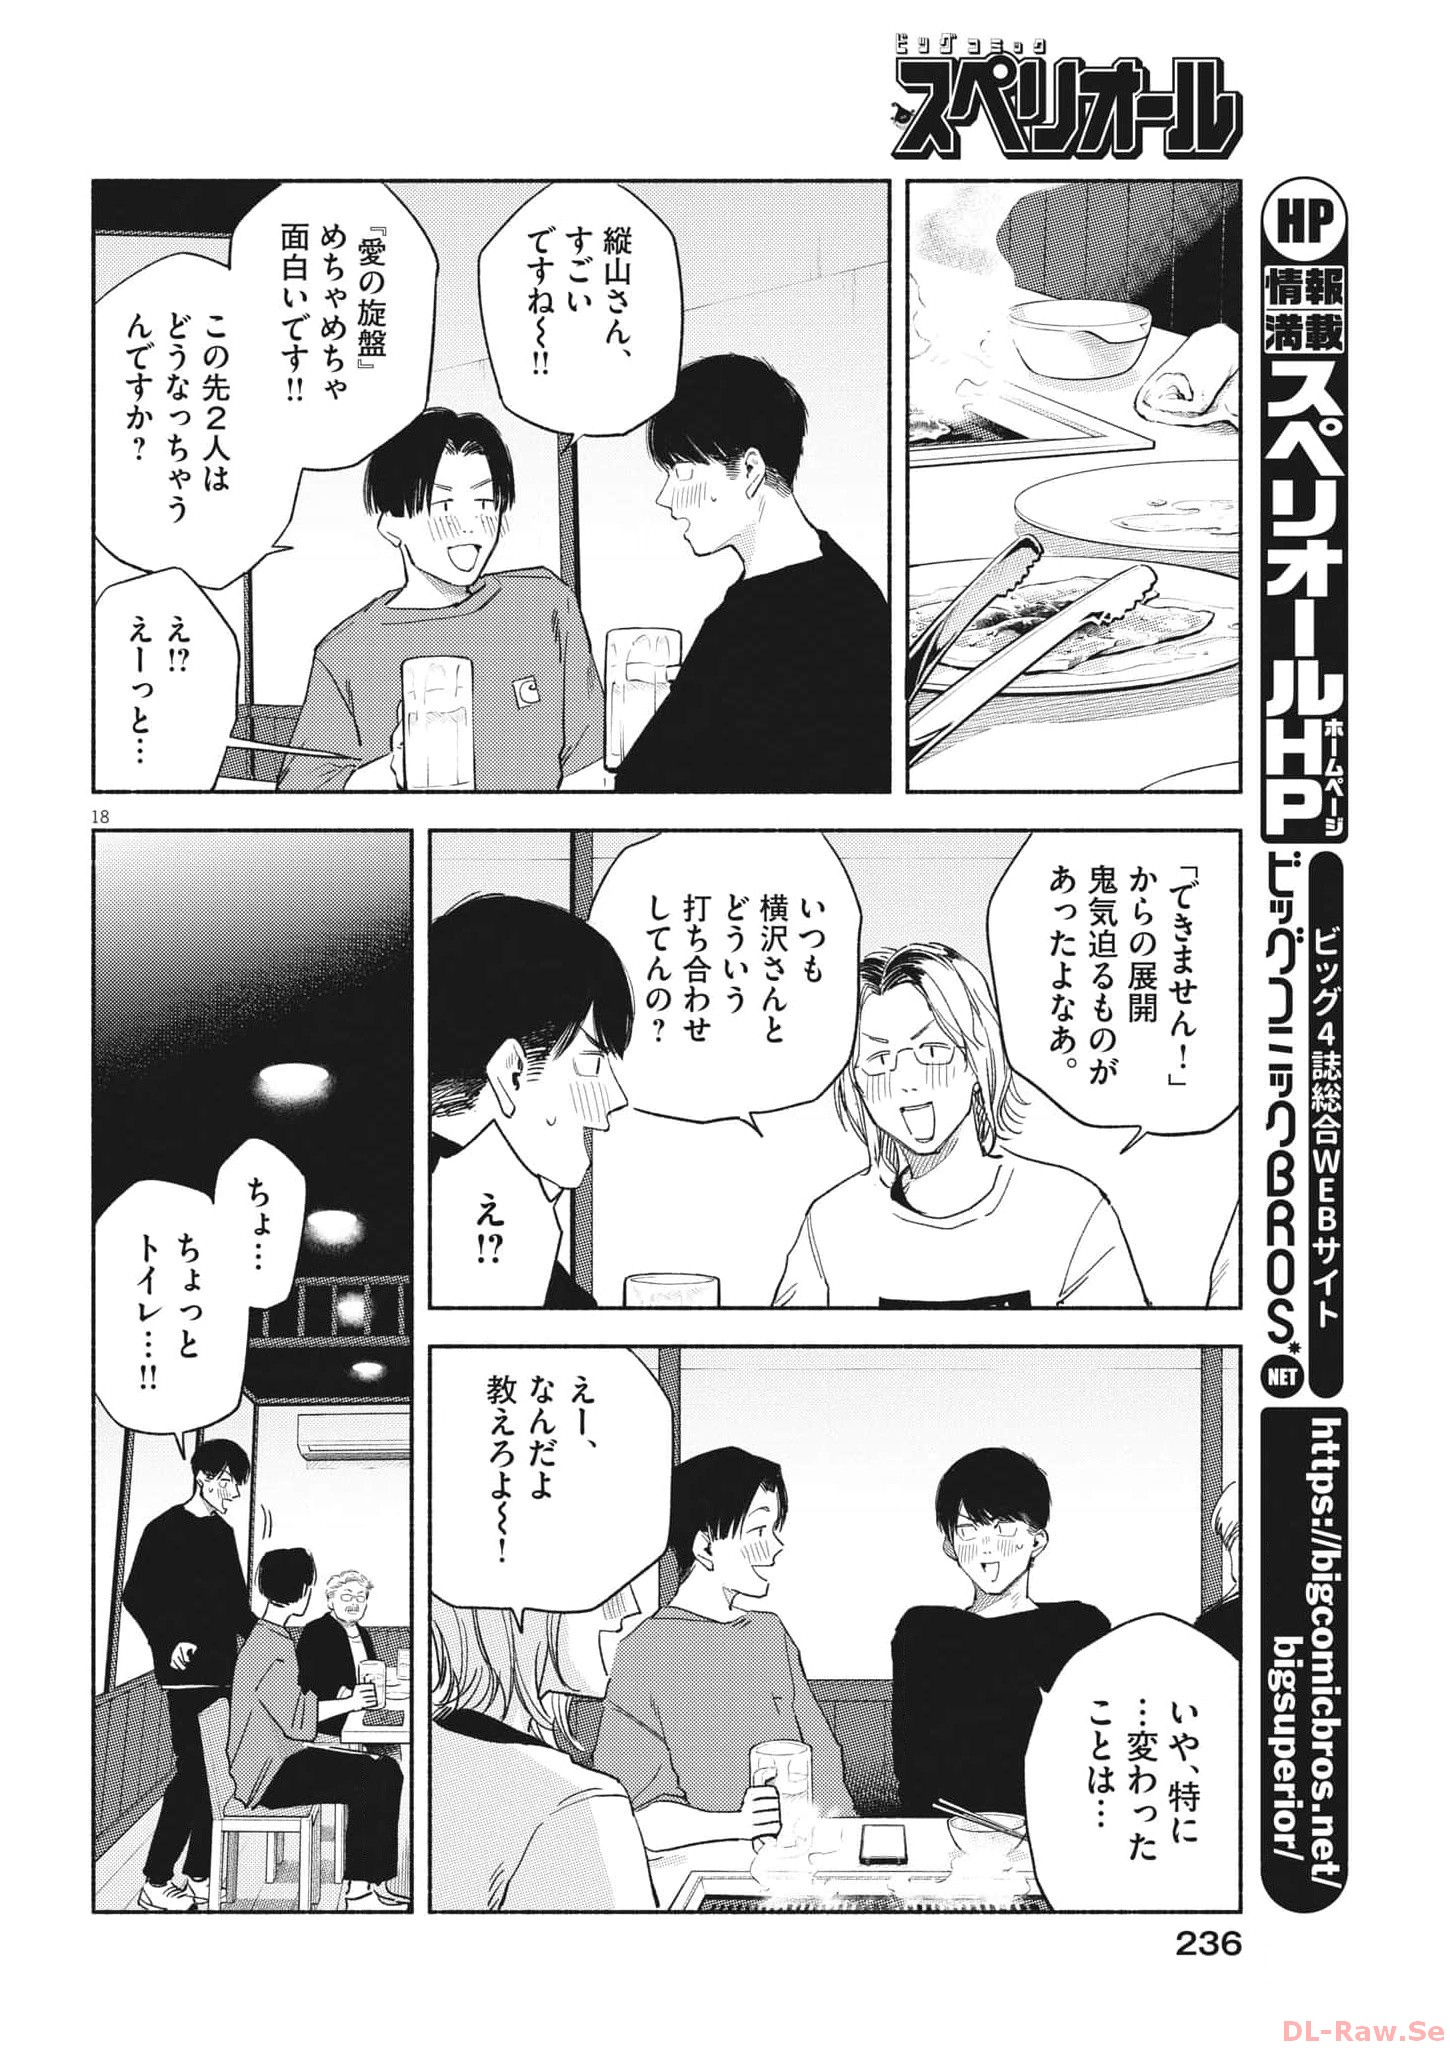 Henshuu no Isshou - Chapter 13 - Page 18